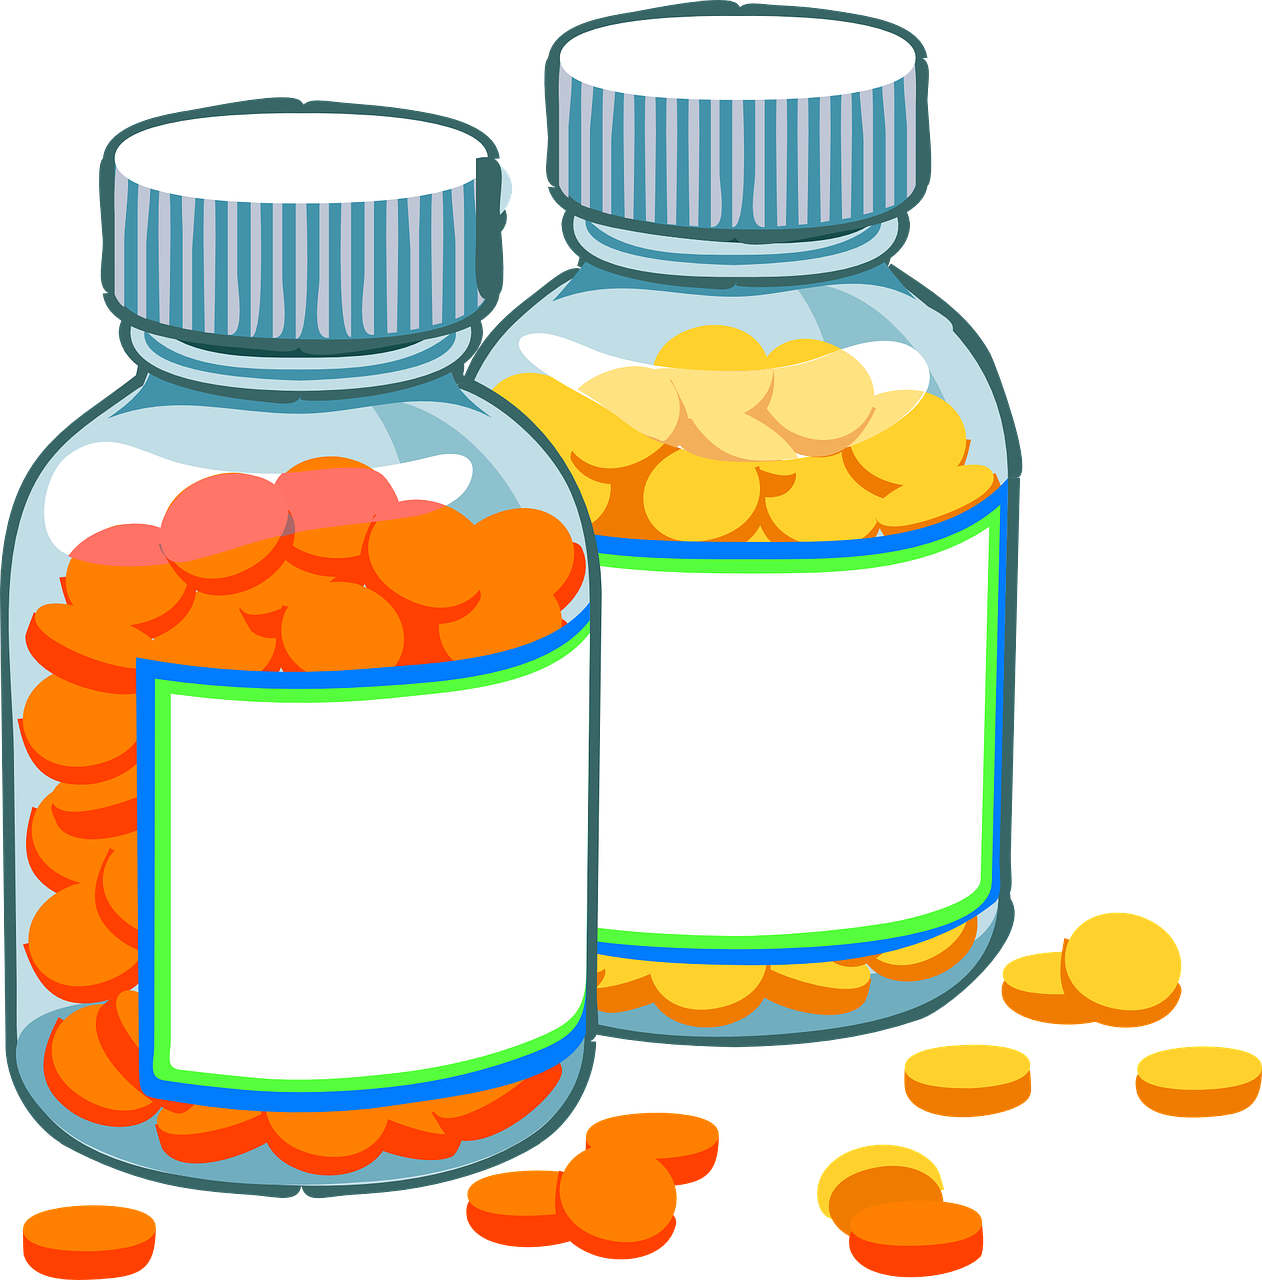 Study Drugs In Bottles - Medicine Log And Journal: Log Your Medicines (1262x1280)